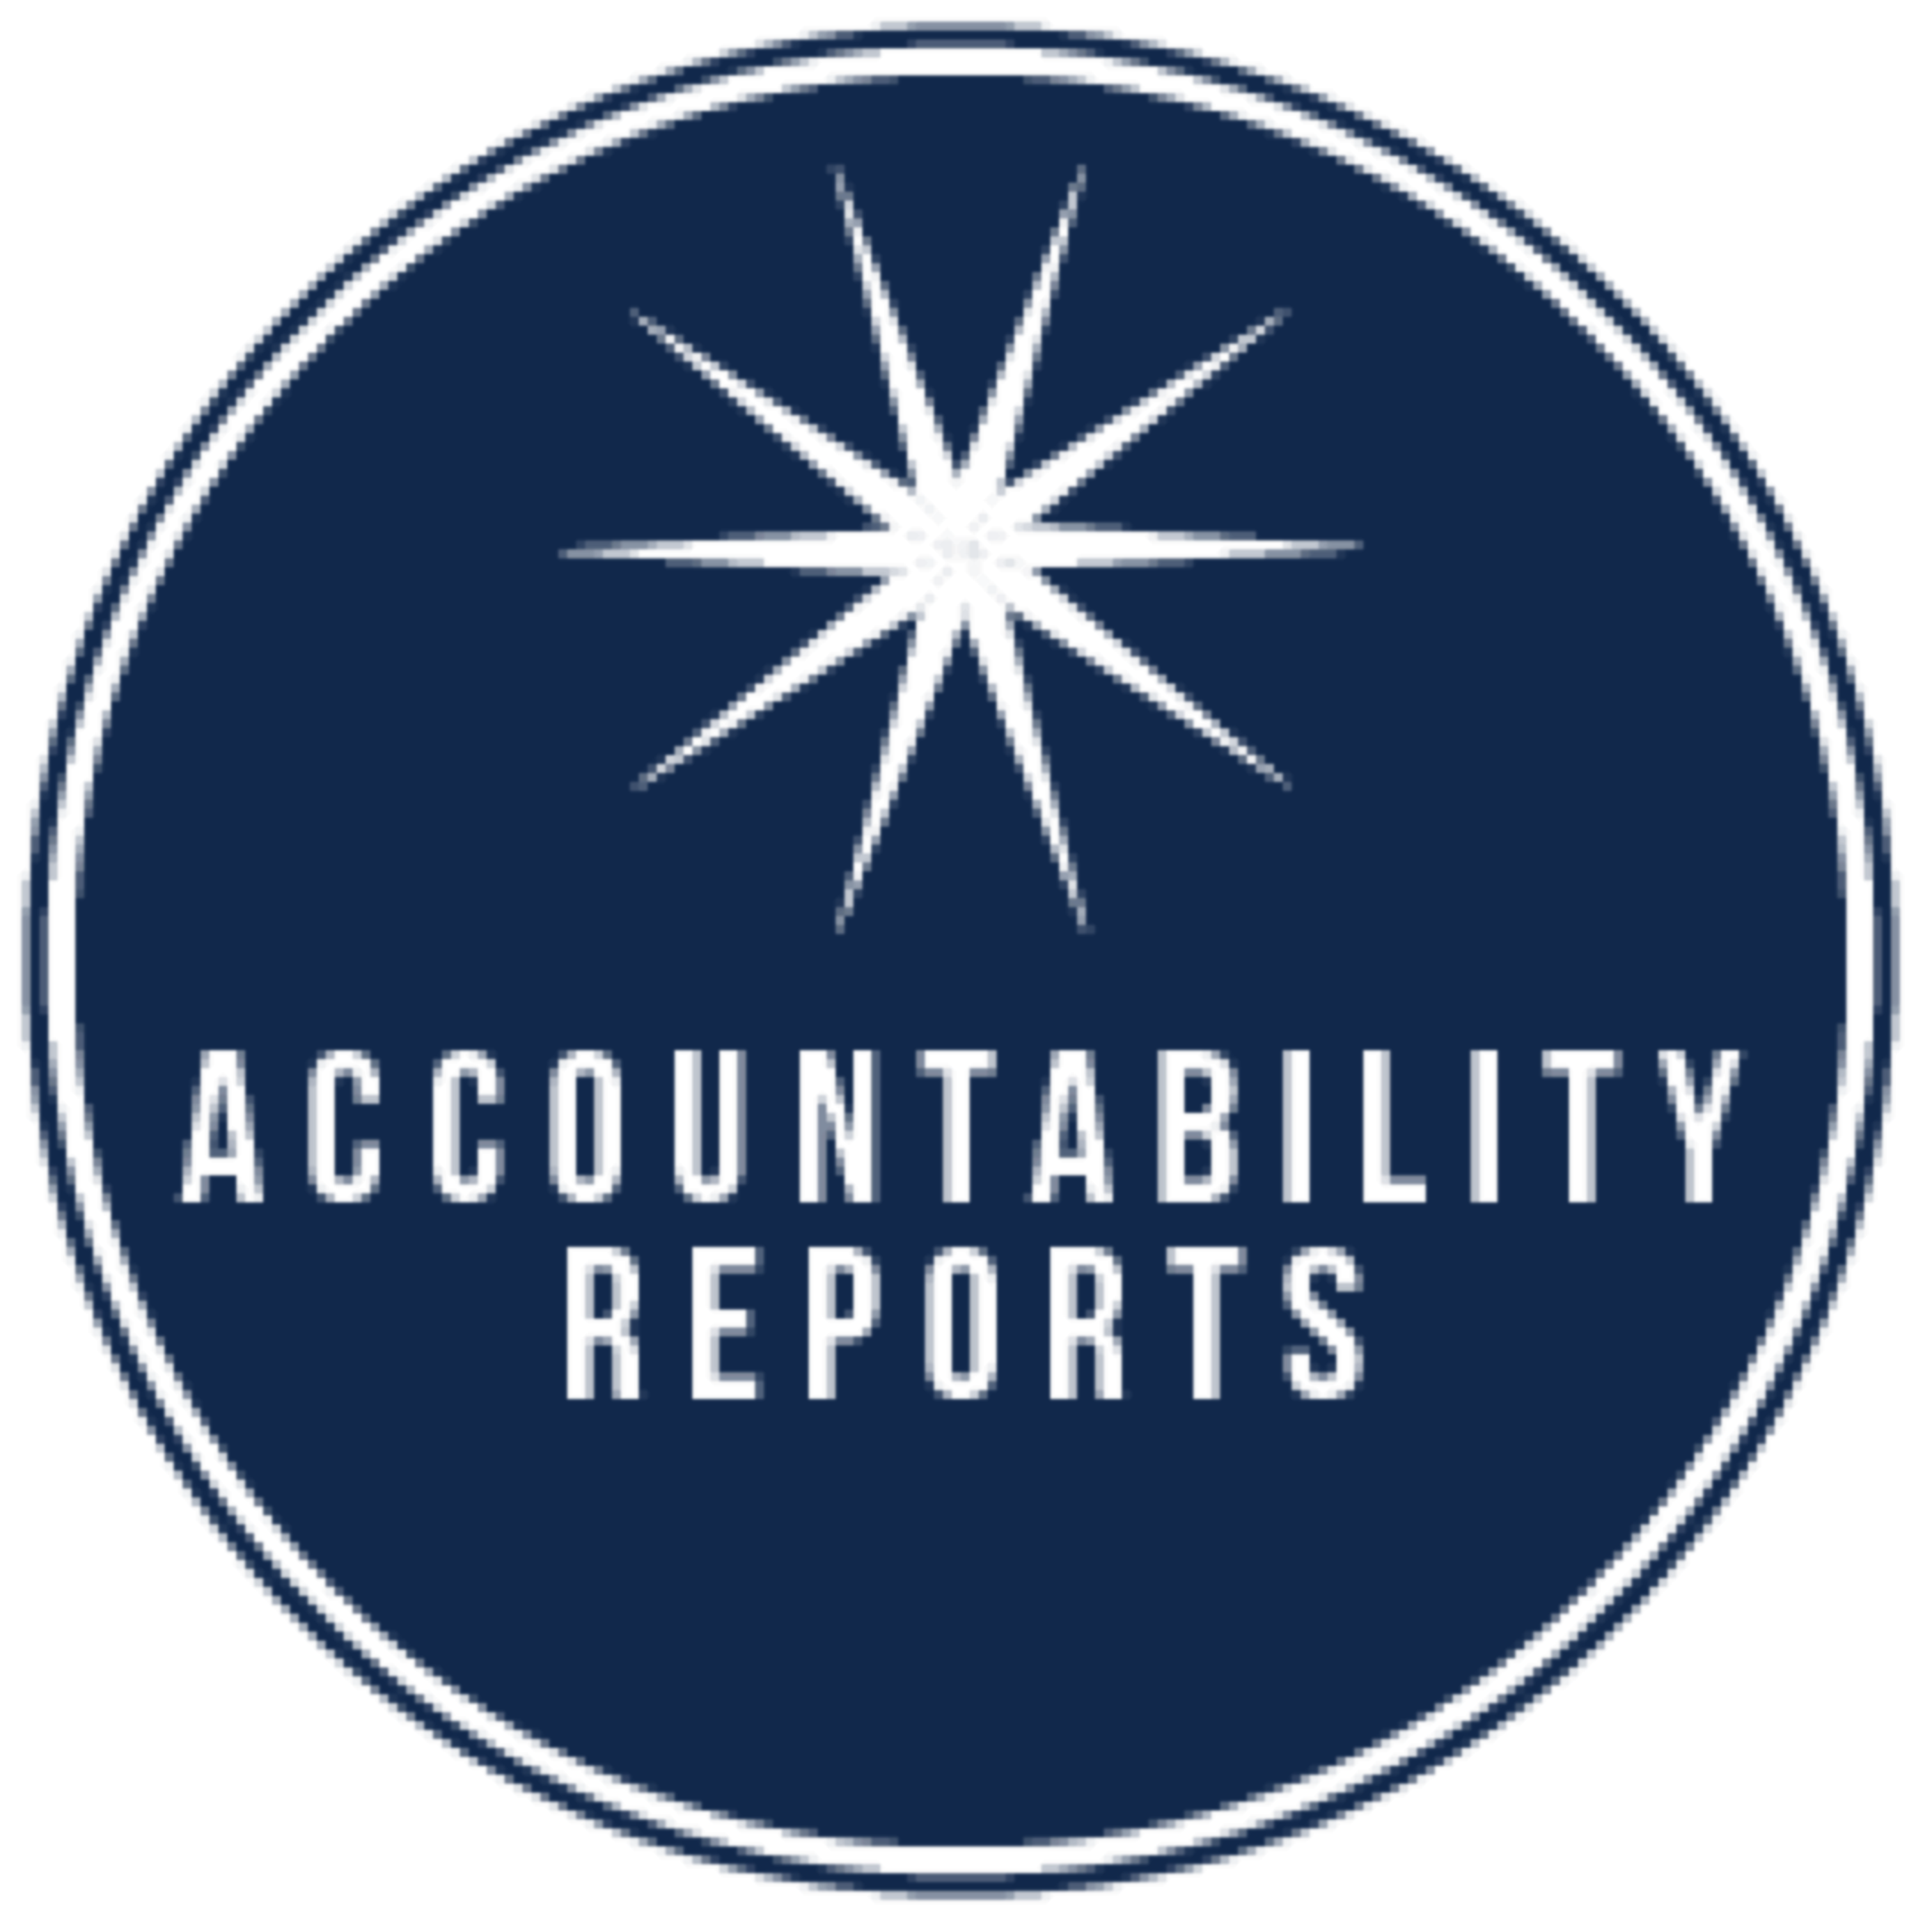 Accountability reports